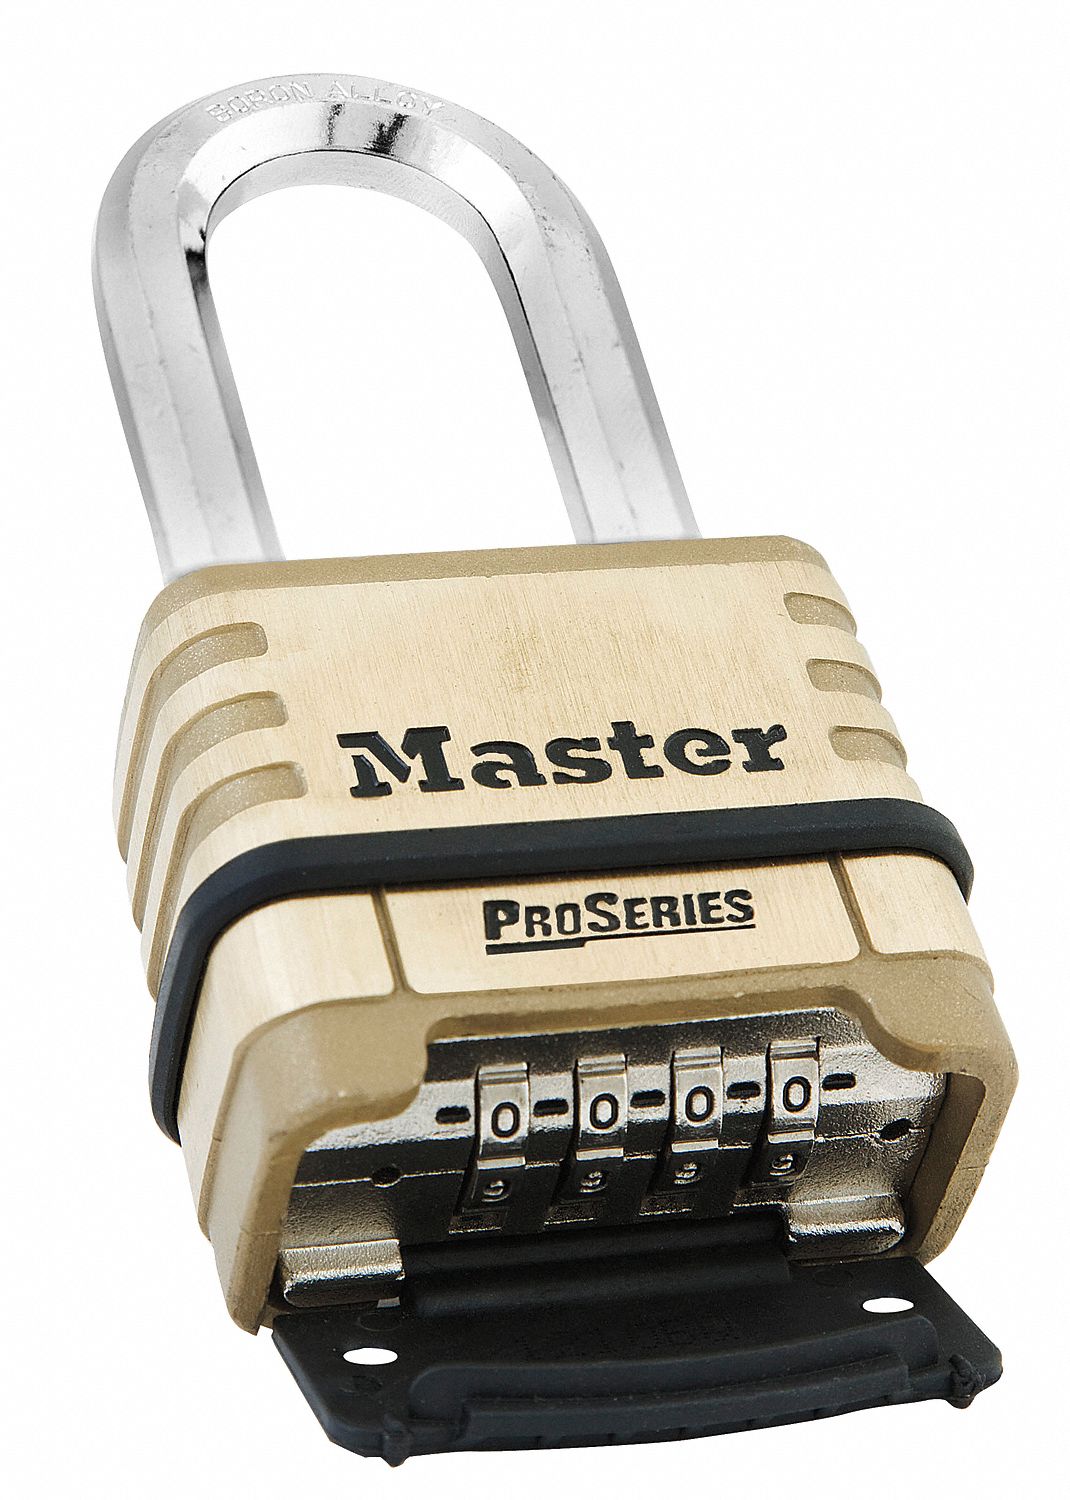 master lock dial combination